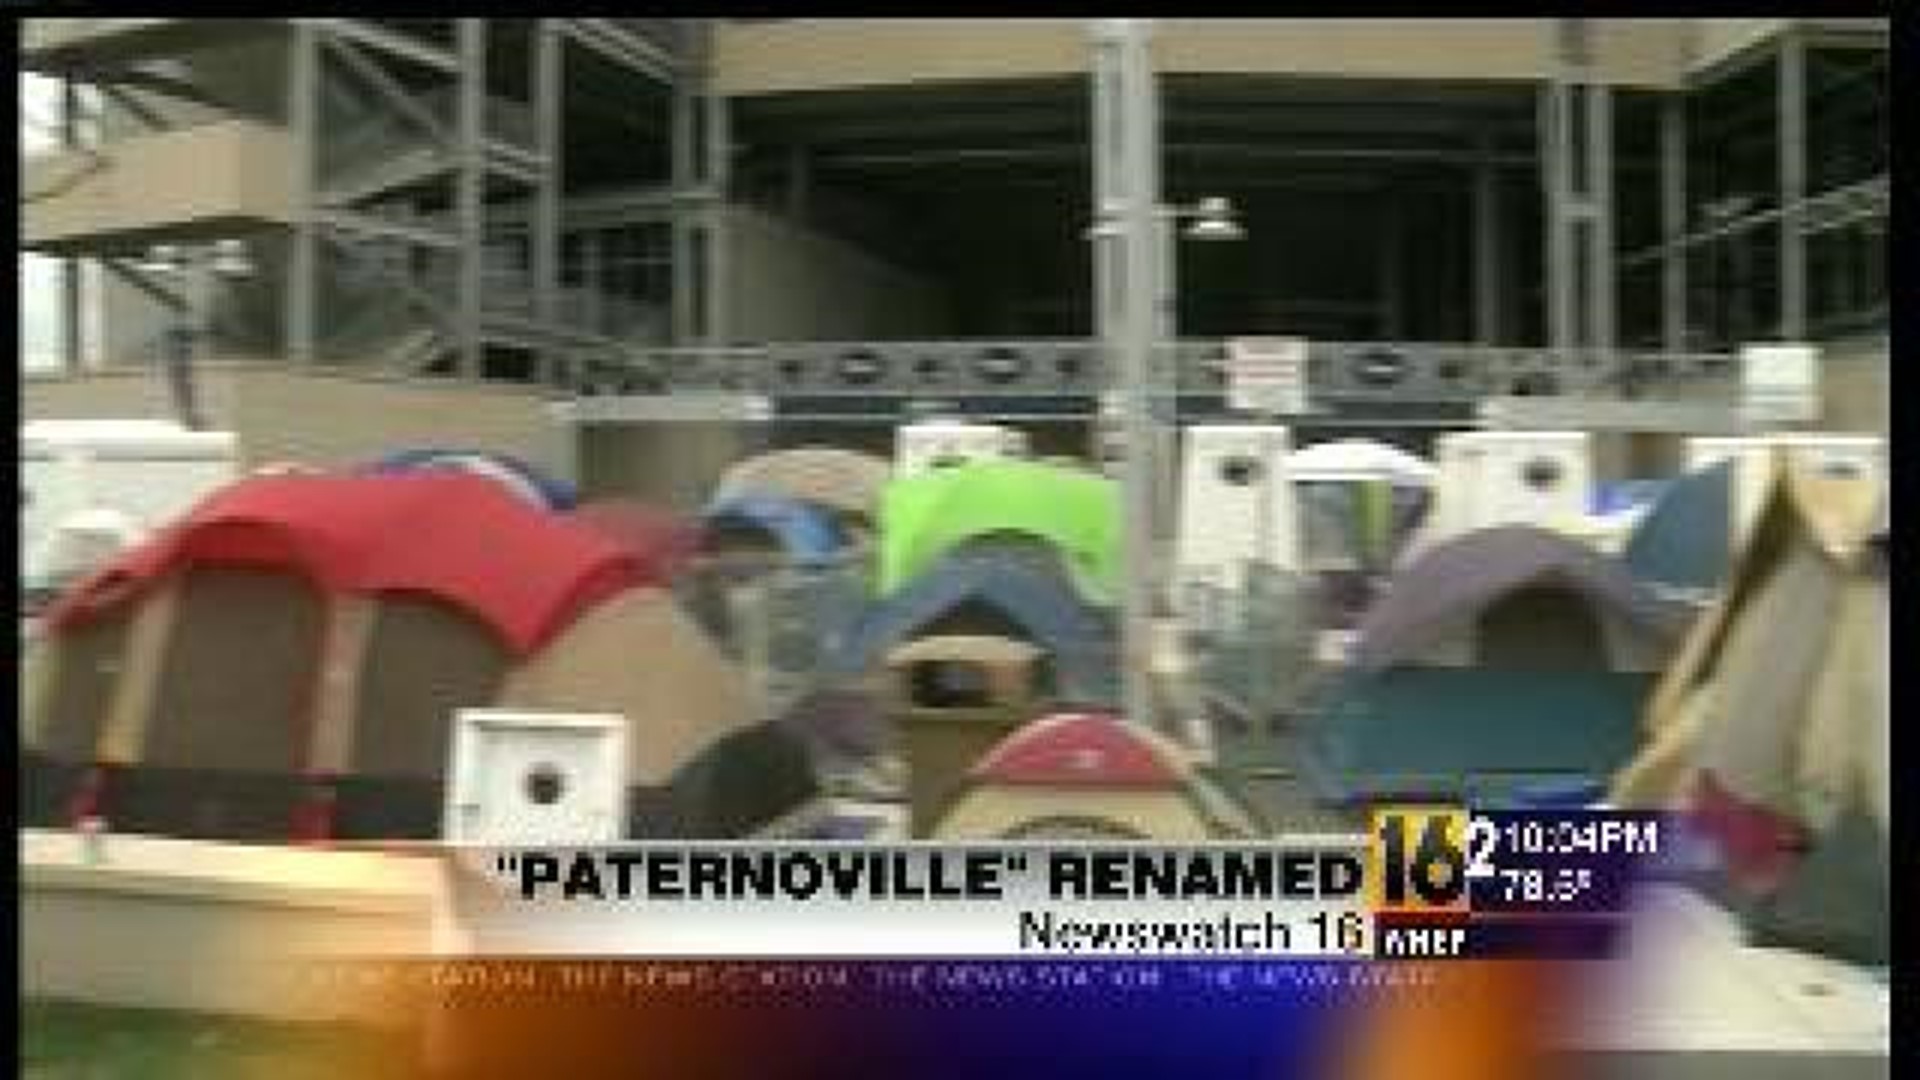 Penn State Student Section Renamed "Nittanyville"